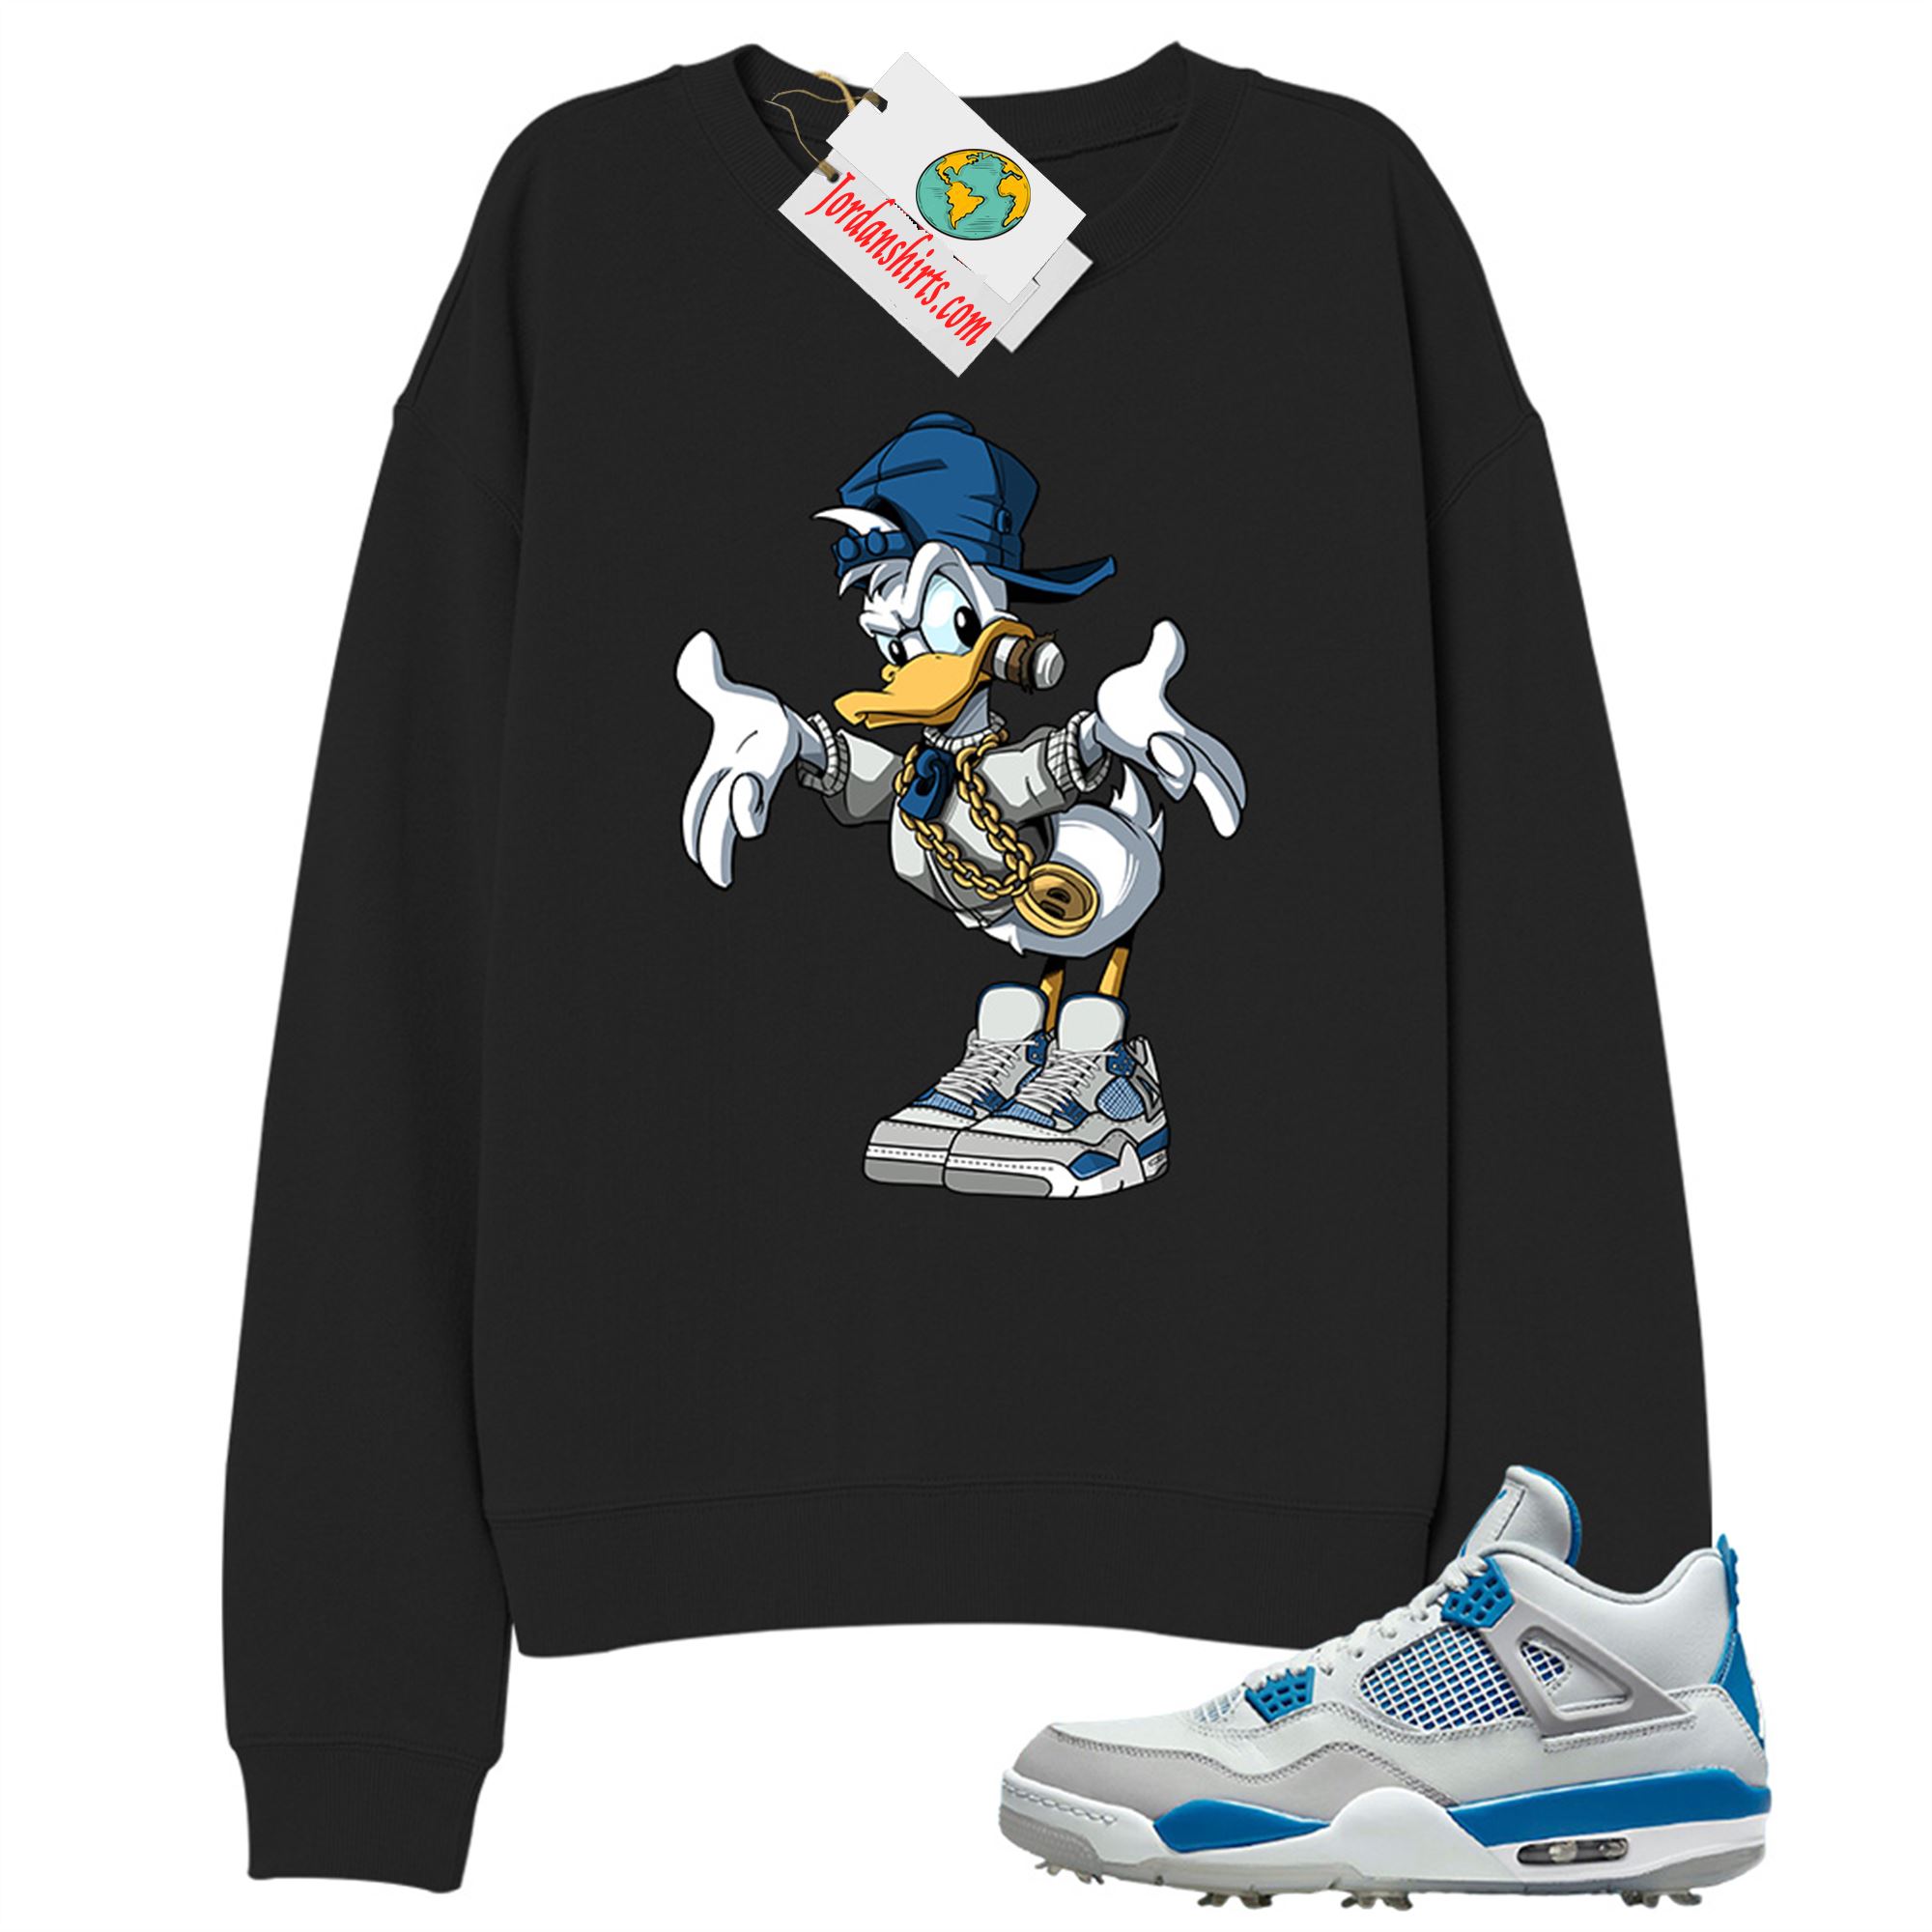 Jordan 4 Sweatshirt, Donald Duck Black Sweatshirt Air Jordan 4 Golf Military Blue 4s Plus Size Up To 5xl